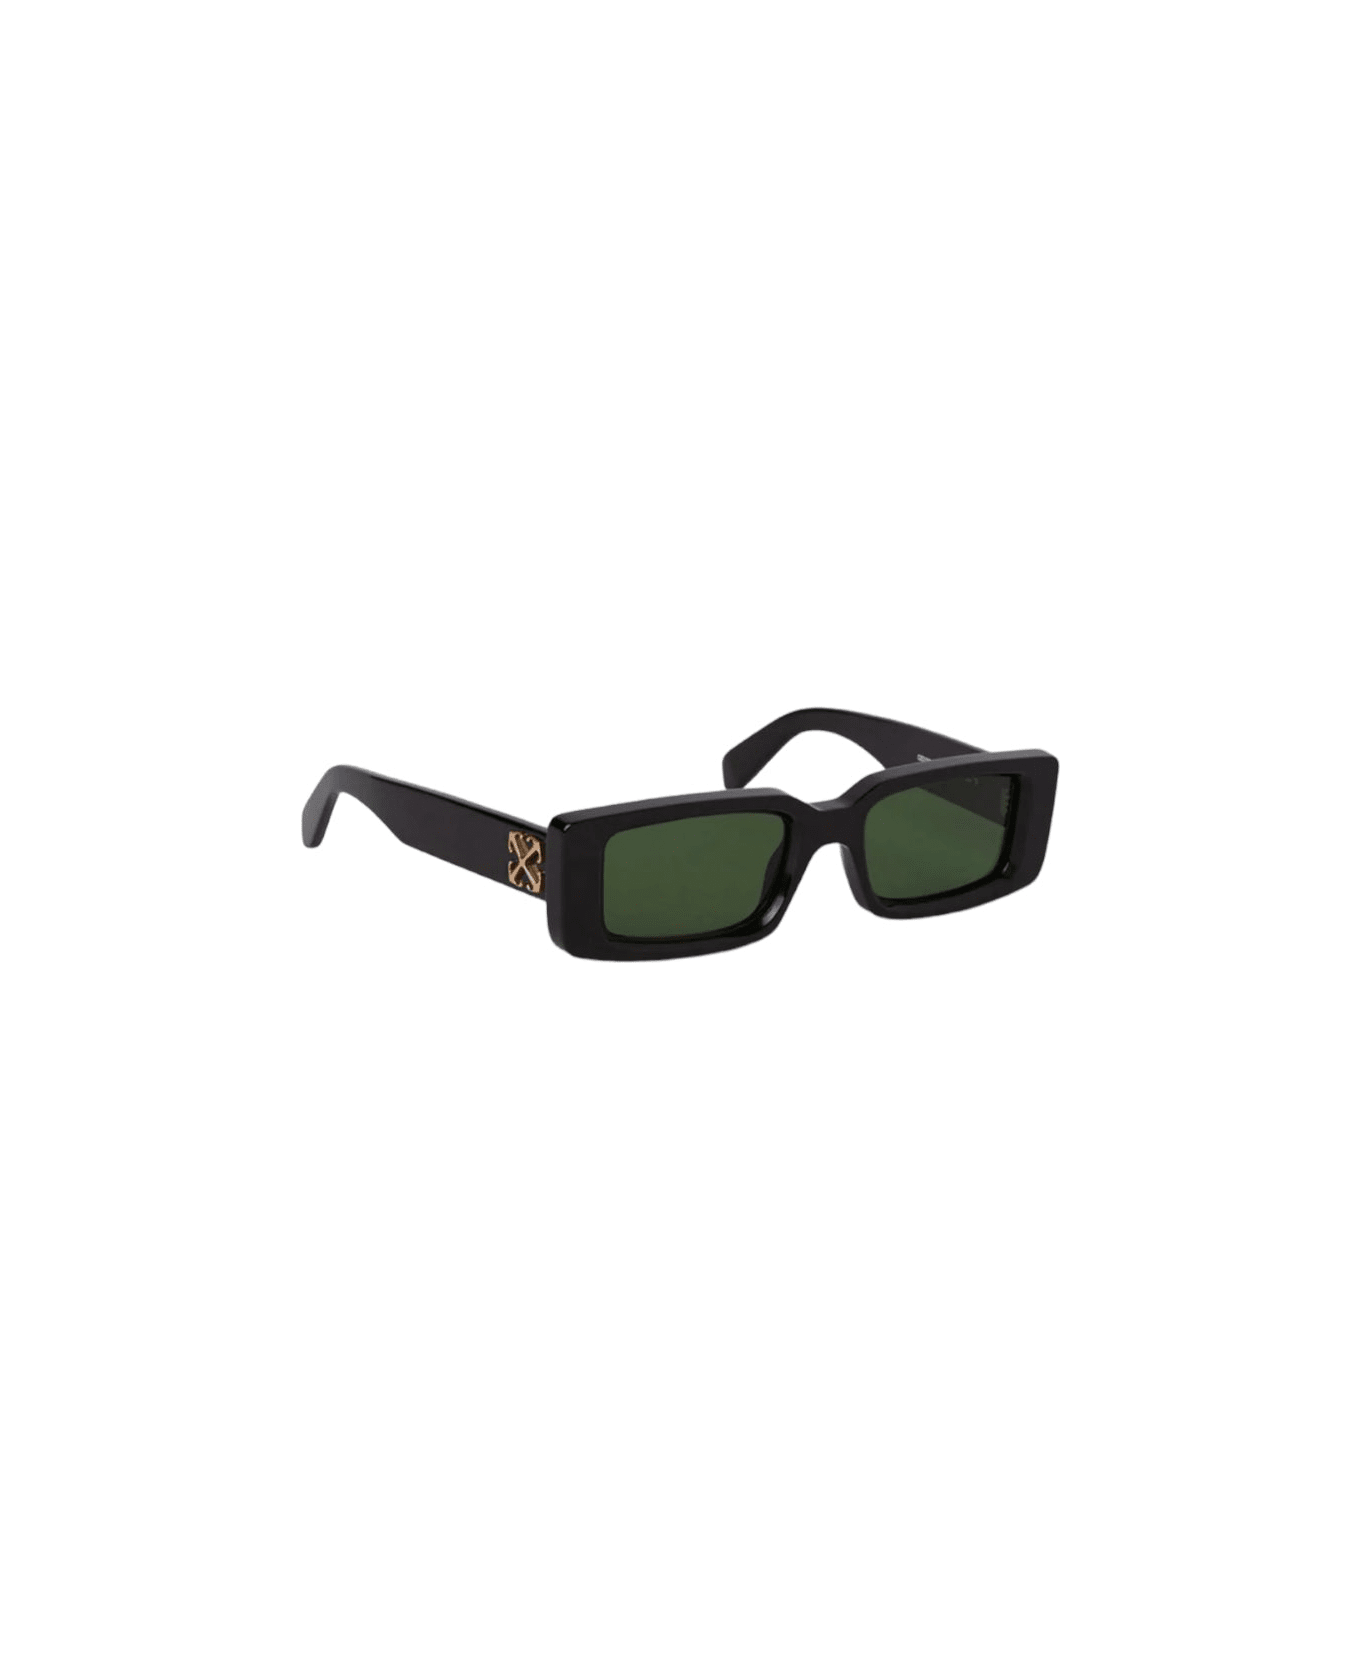 Off-White Arthur - Oeri127 lil sunglasses